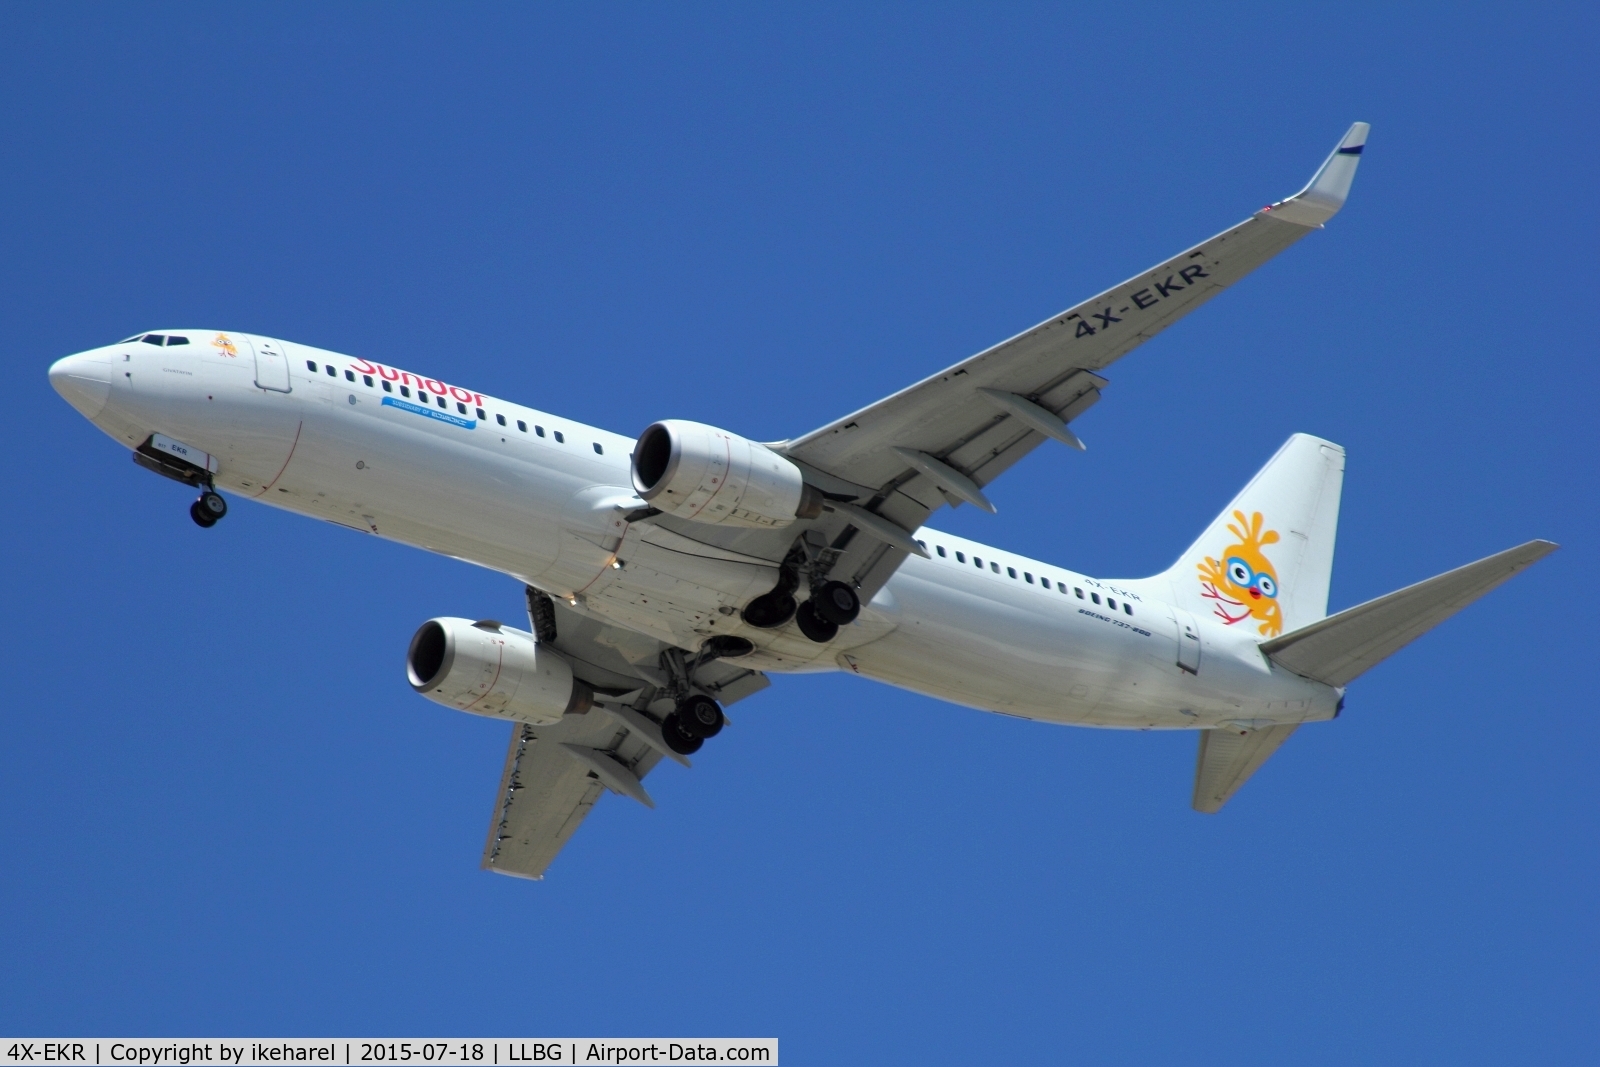 4X-EKR, 2000 Boeing 737-804 C/N 30466, Fly in from Heraklion Kazantzakis International Airport, Greece, landing on runway 30.